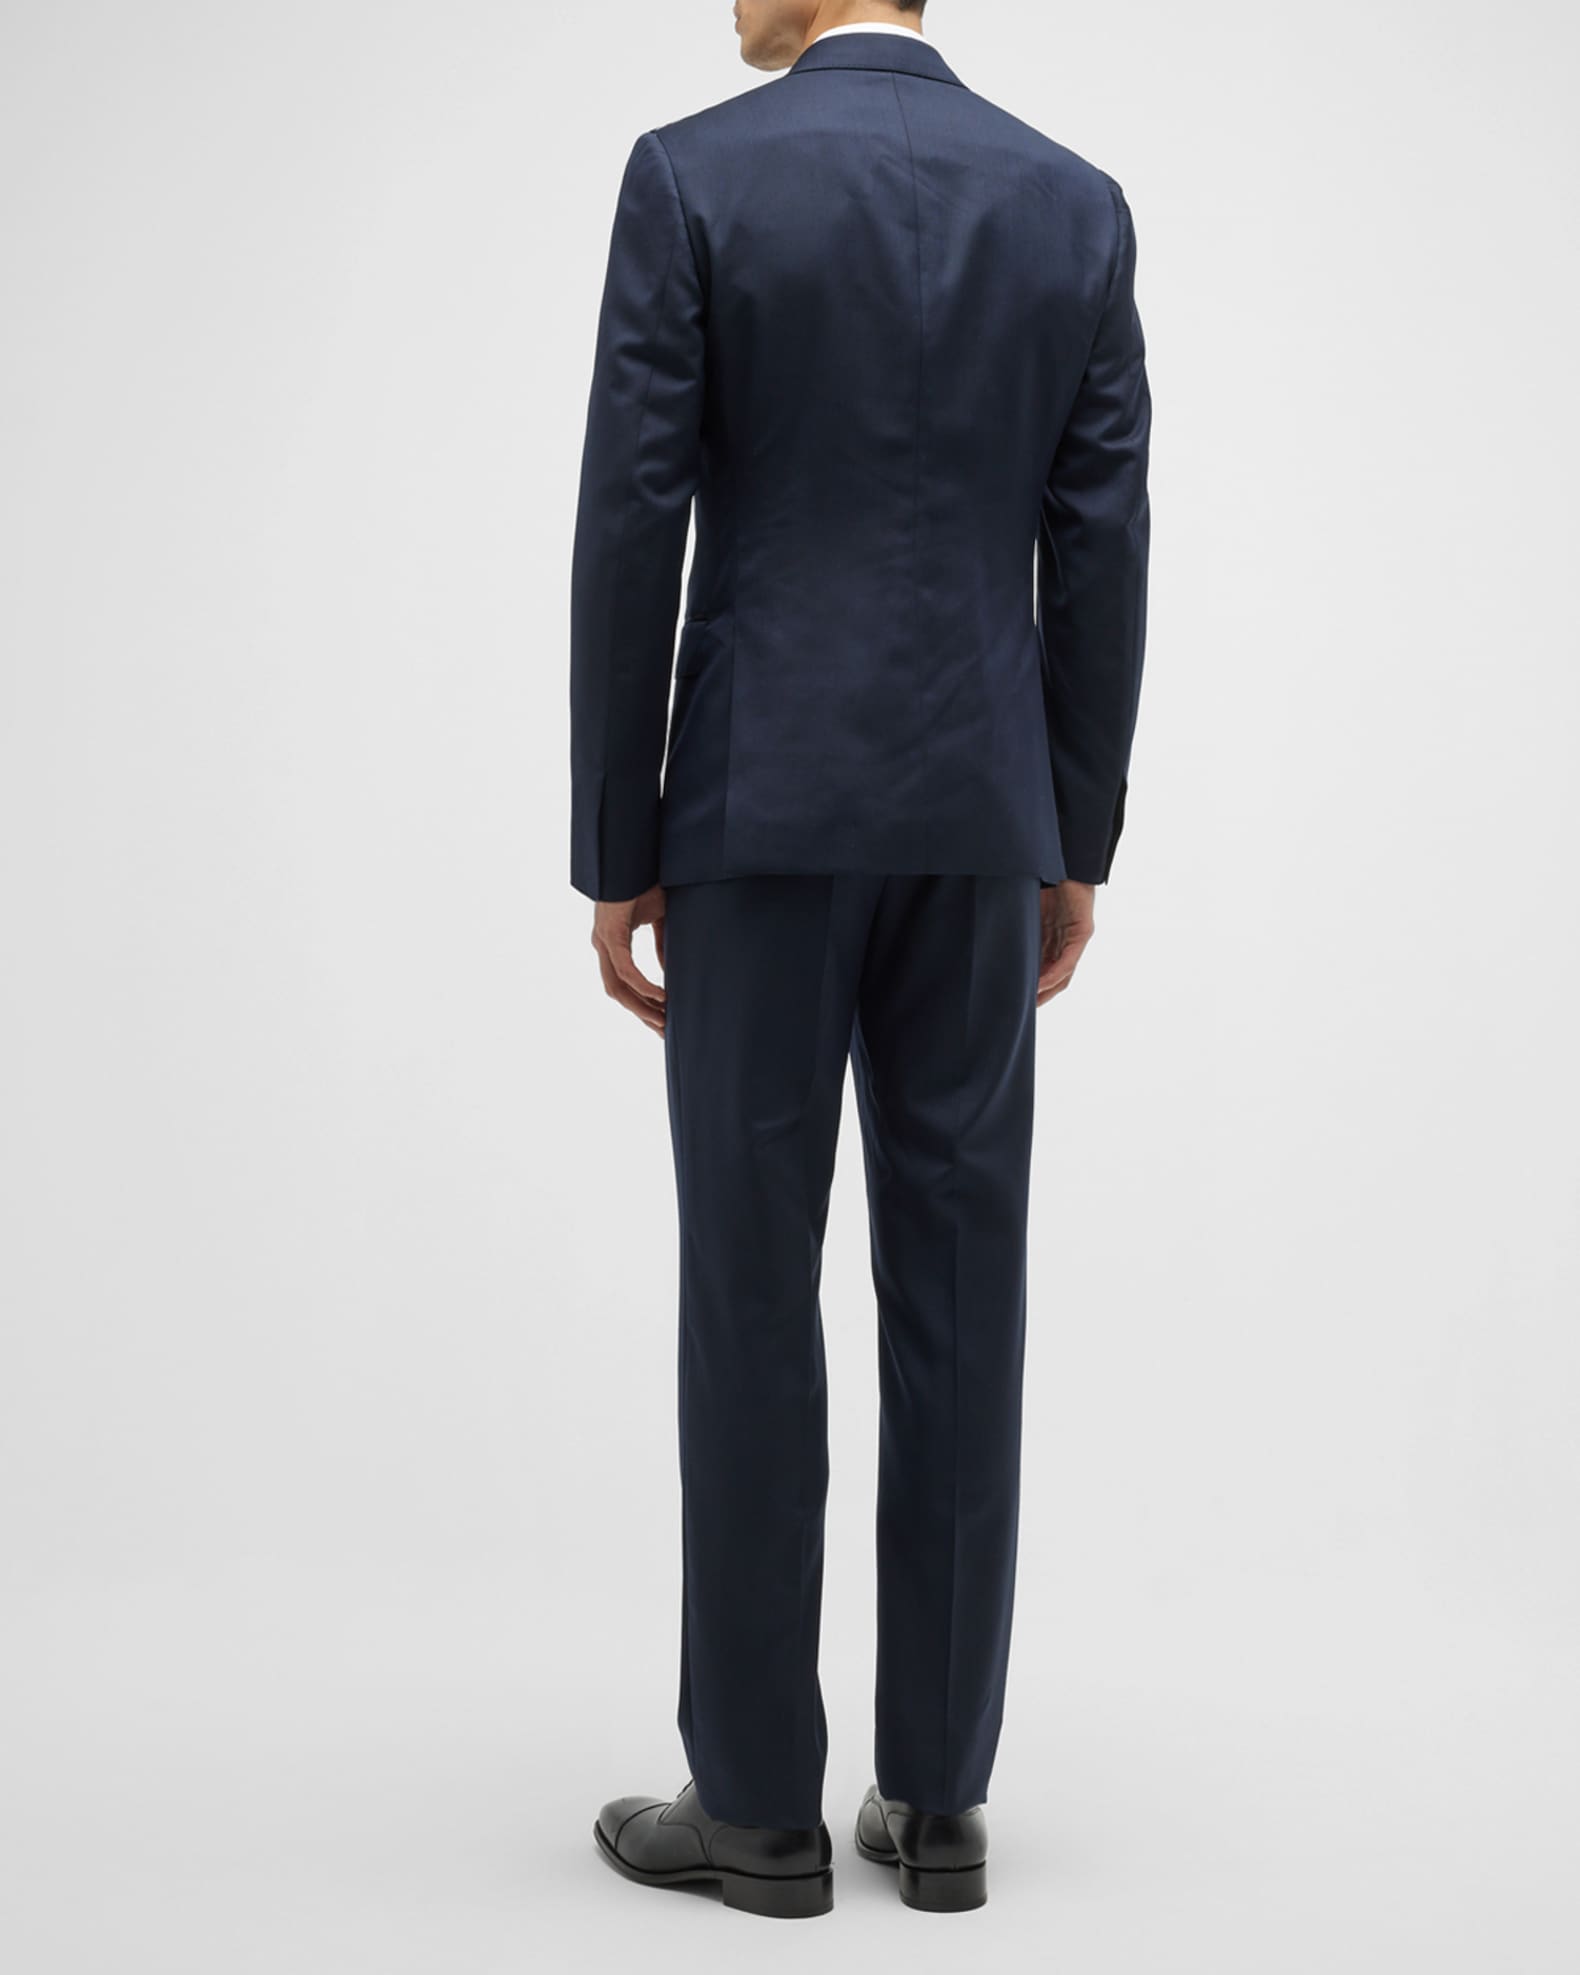 Brioni Men's Wool Herringbone Suit | Neiman Marcus